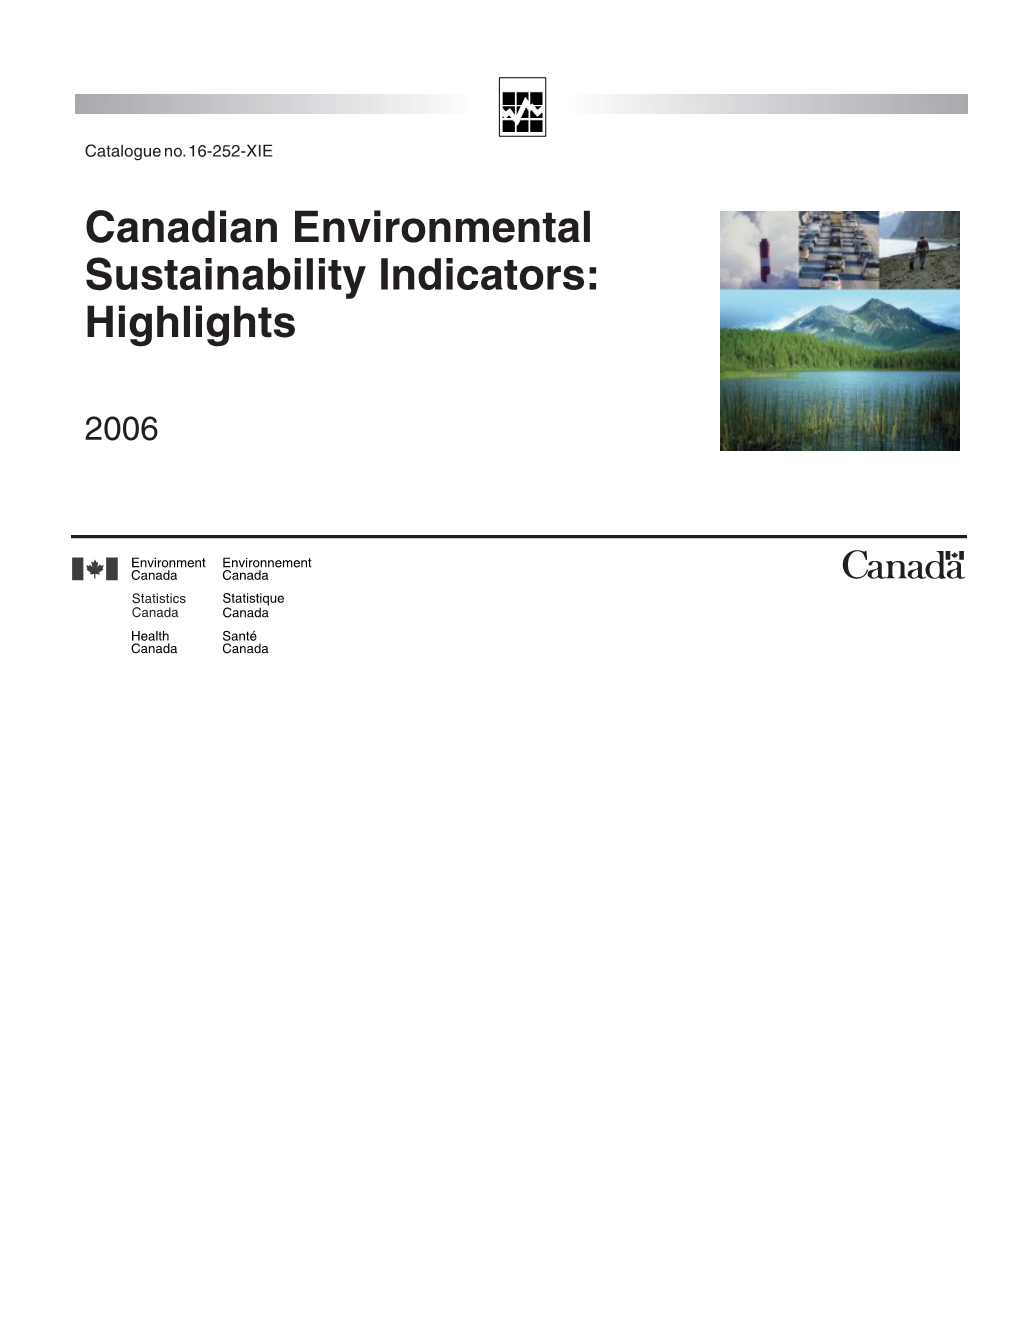 Canadian Environmental Sustainability Indicators: Highlights